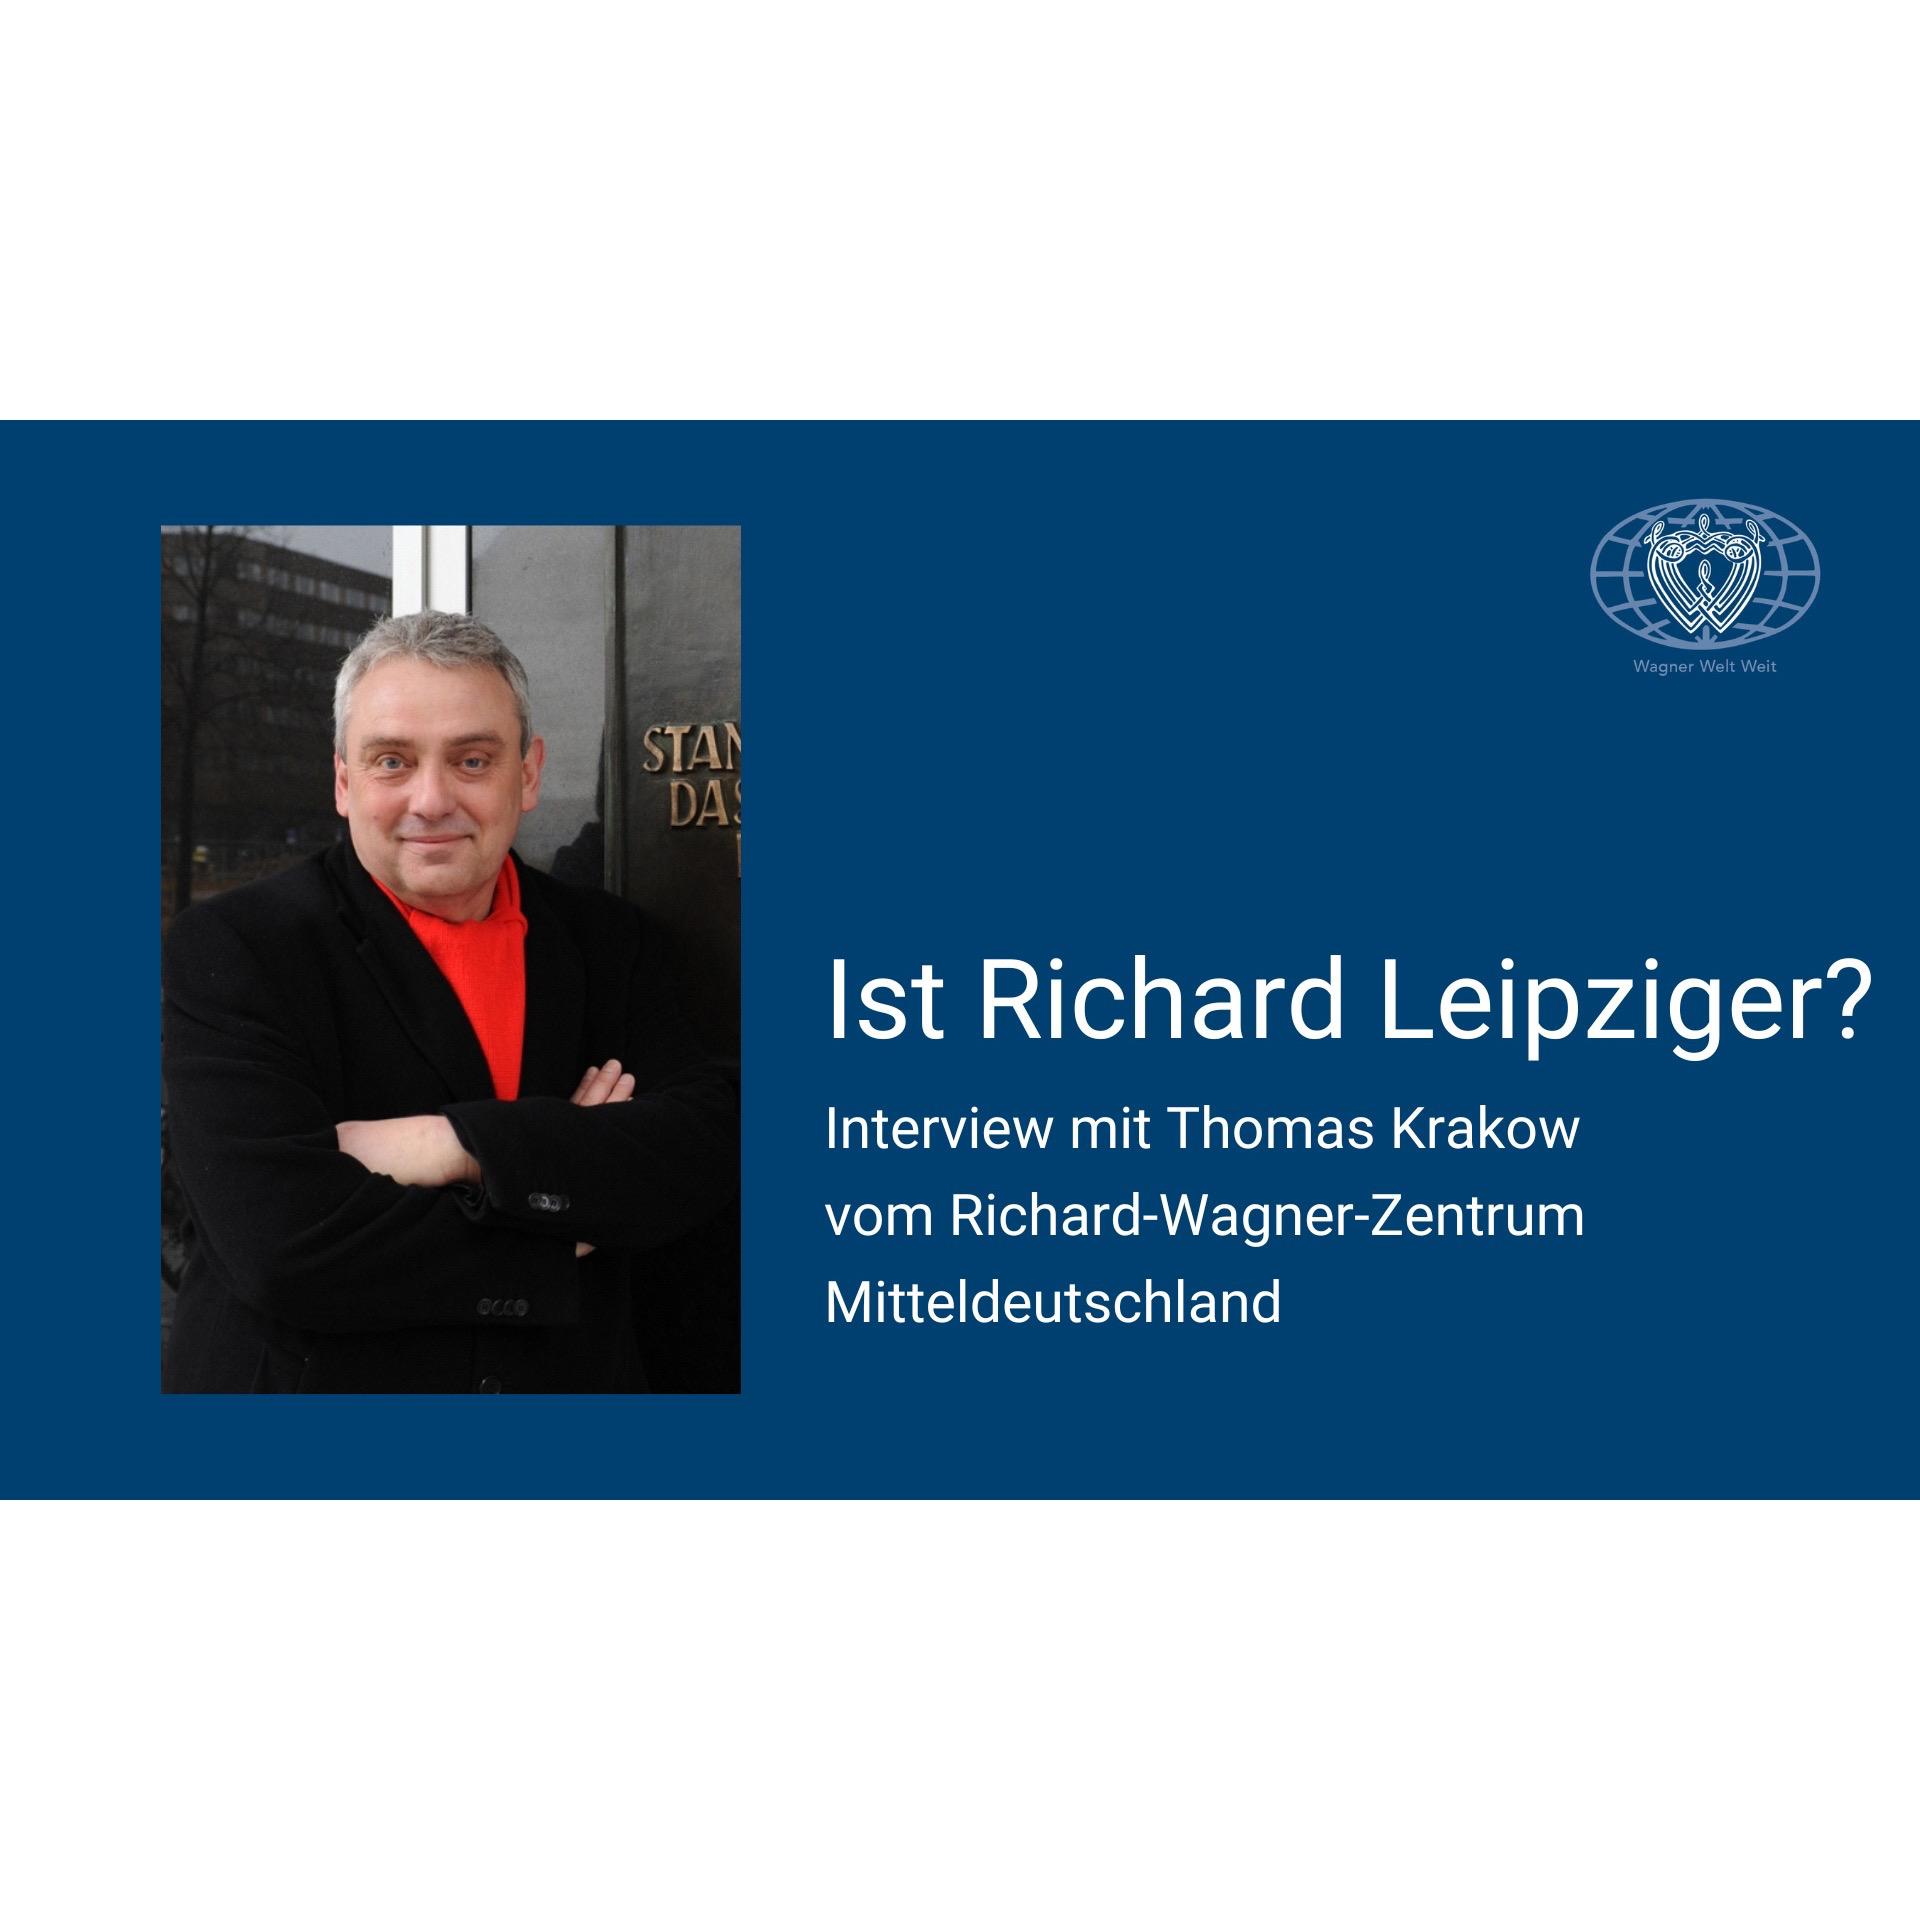 Richard ist Leipziger?